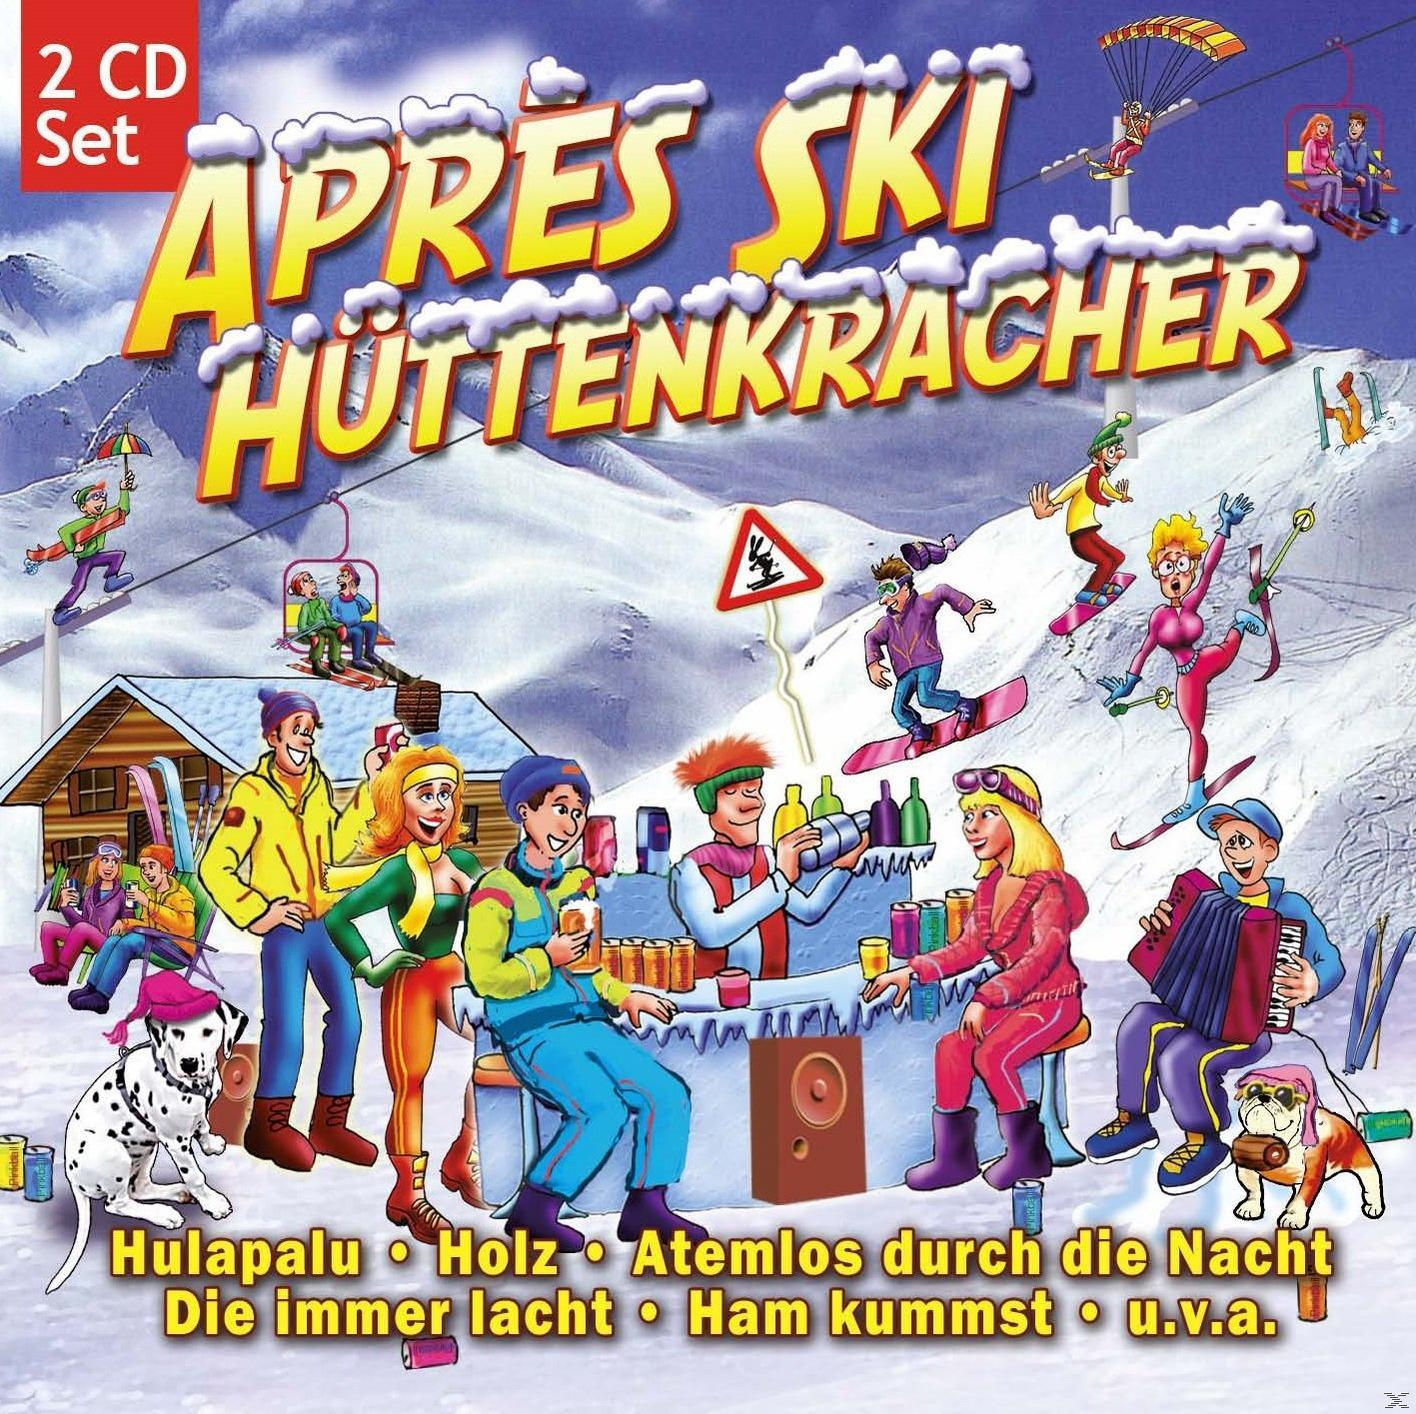 VARIOUS - (CD) Ski Hüttenkracher - Apres